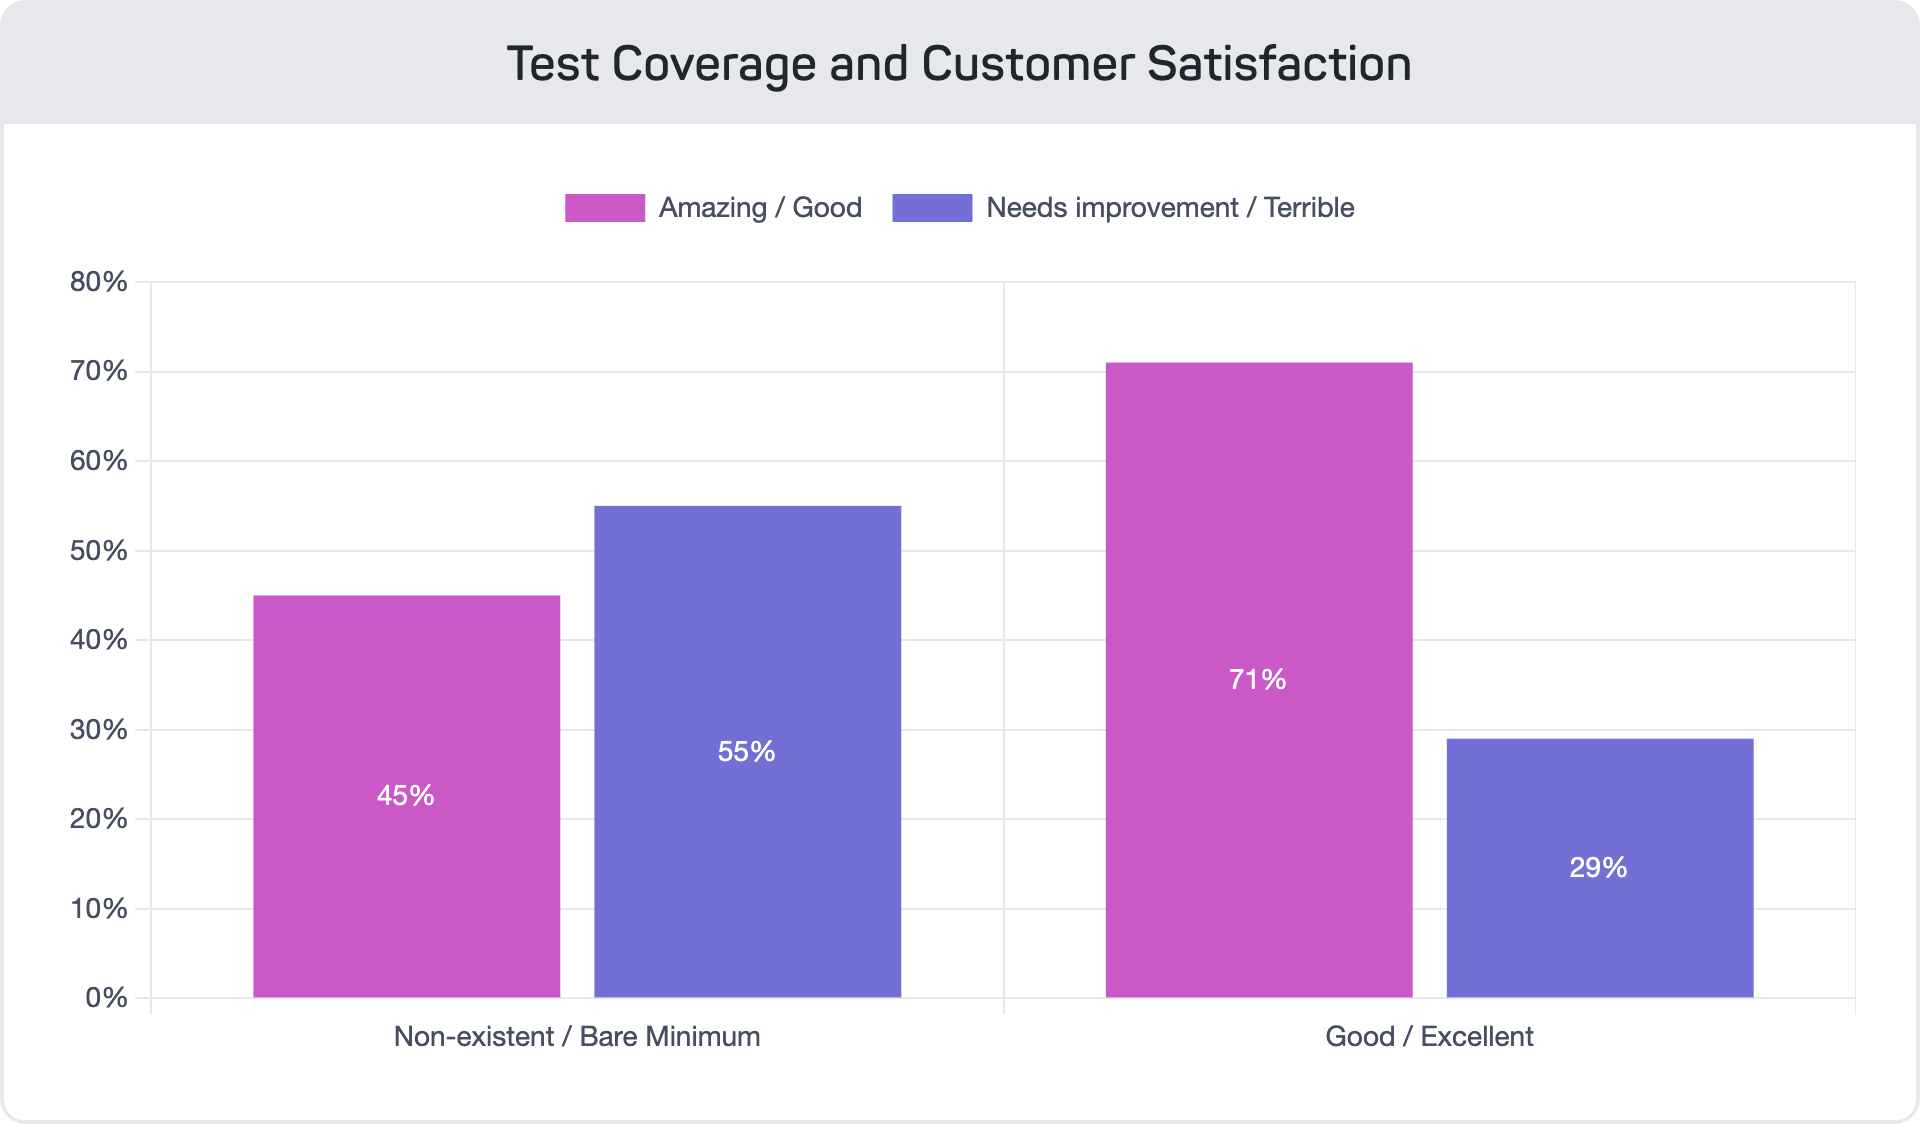 Test-Coverage-and-Customer-Satisfaction_mabl-devops-report-2022_17NOV2022 (5)